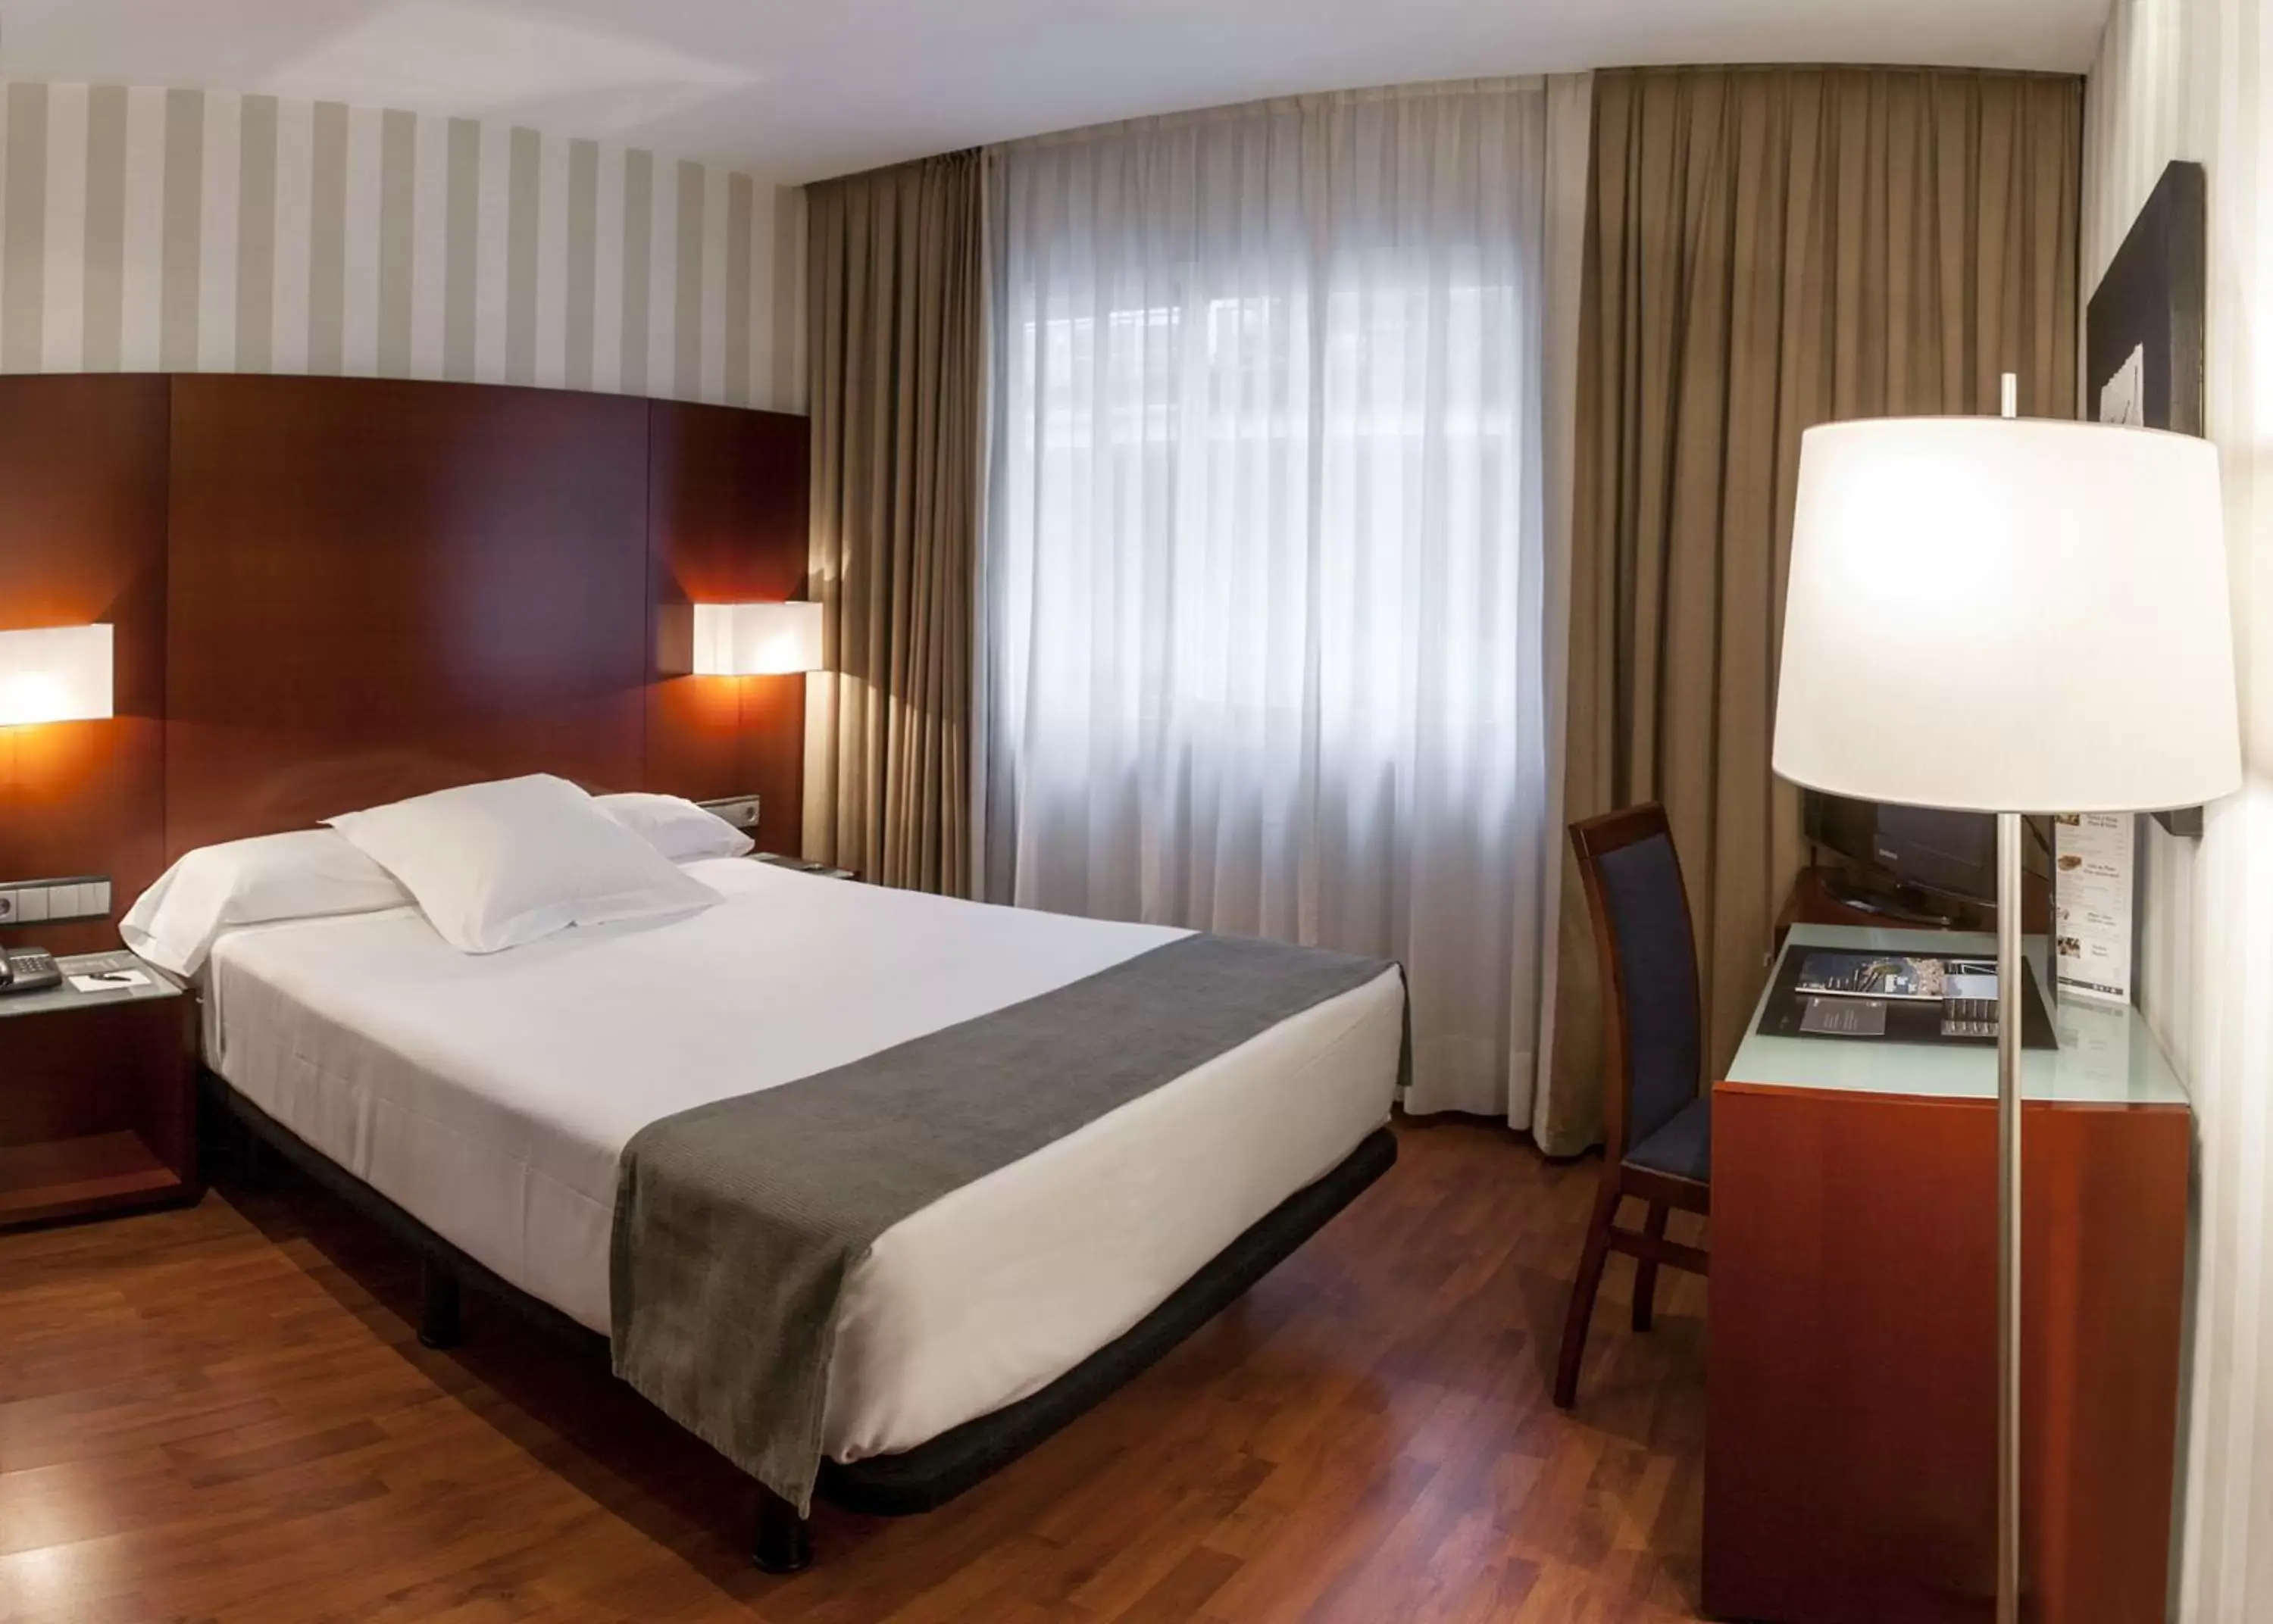 Bed, Room Photo in Zenit Málaga